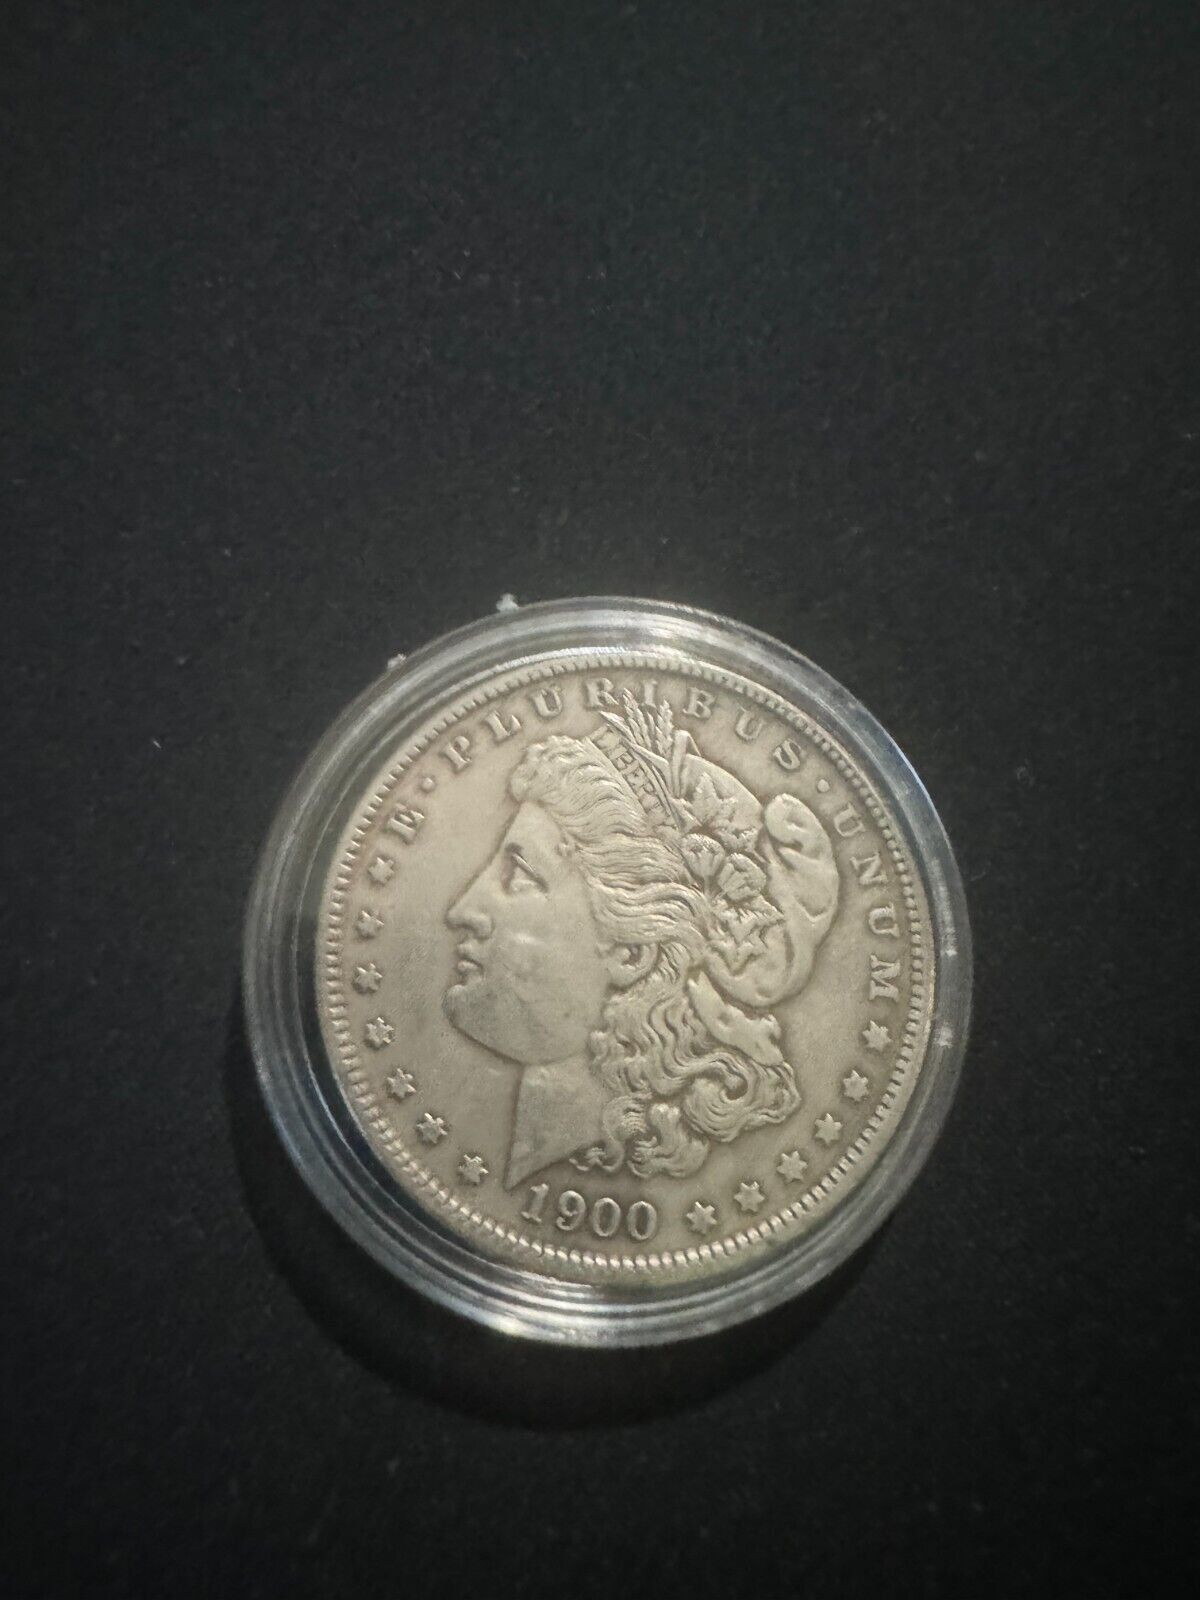 Coin Imitation Of Ancient Morgan Collection Commemorative